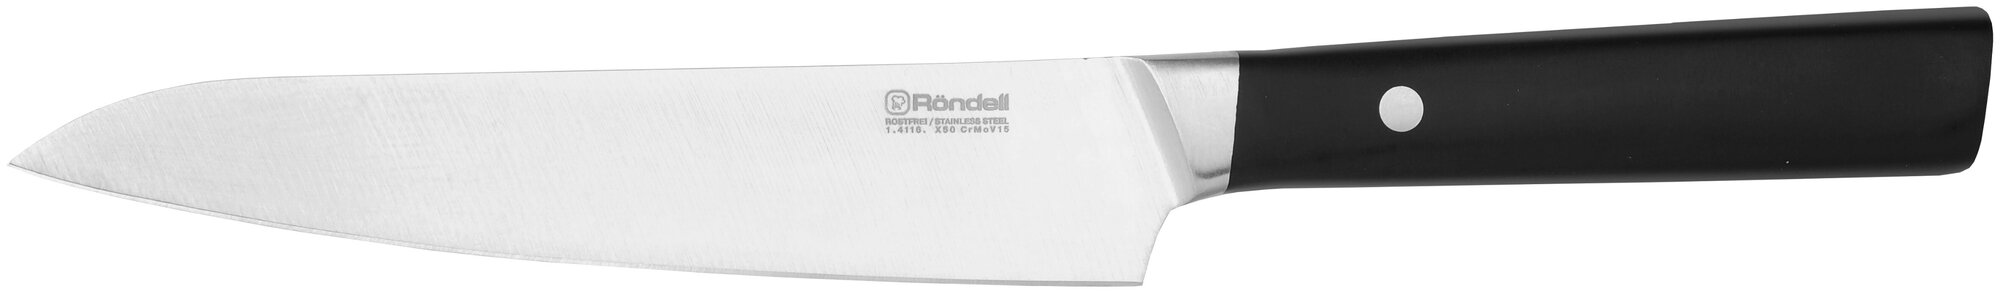 1137 Нож универсальный Spata Rondell (BK)